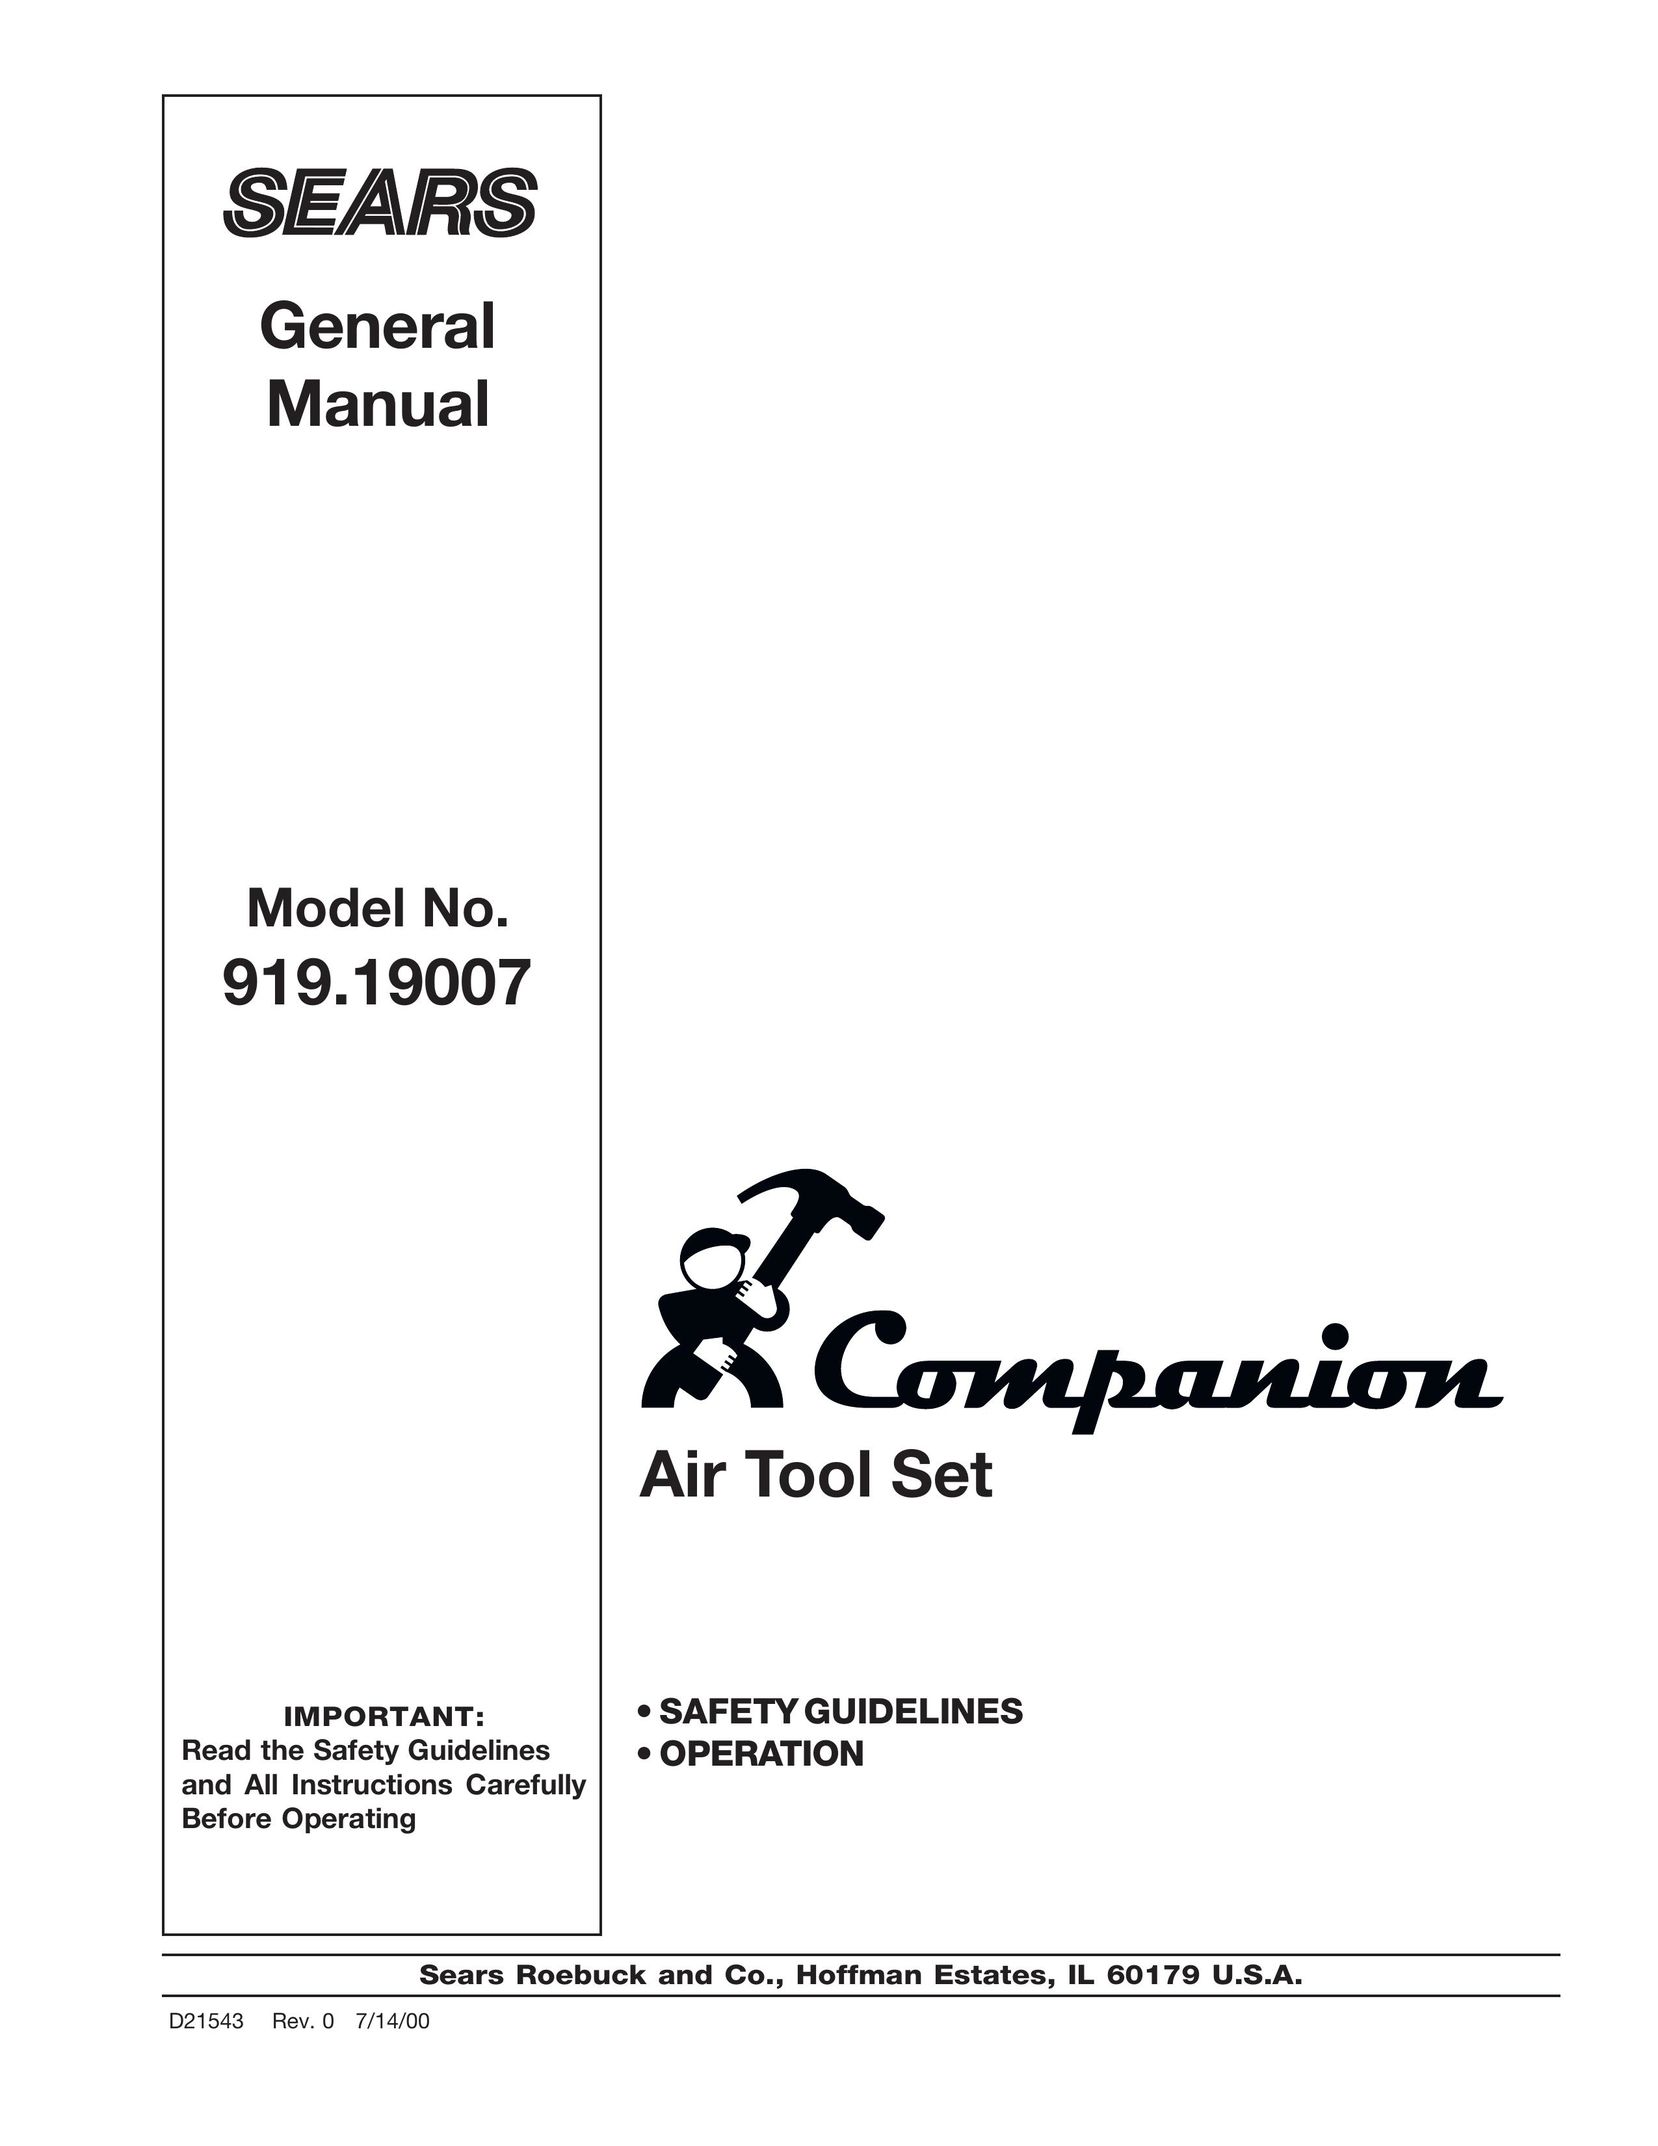 DeVillbiss Air Power Company 919.19007 Air Compressor User Manual